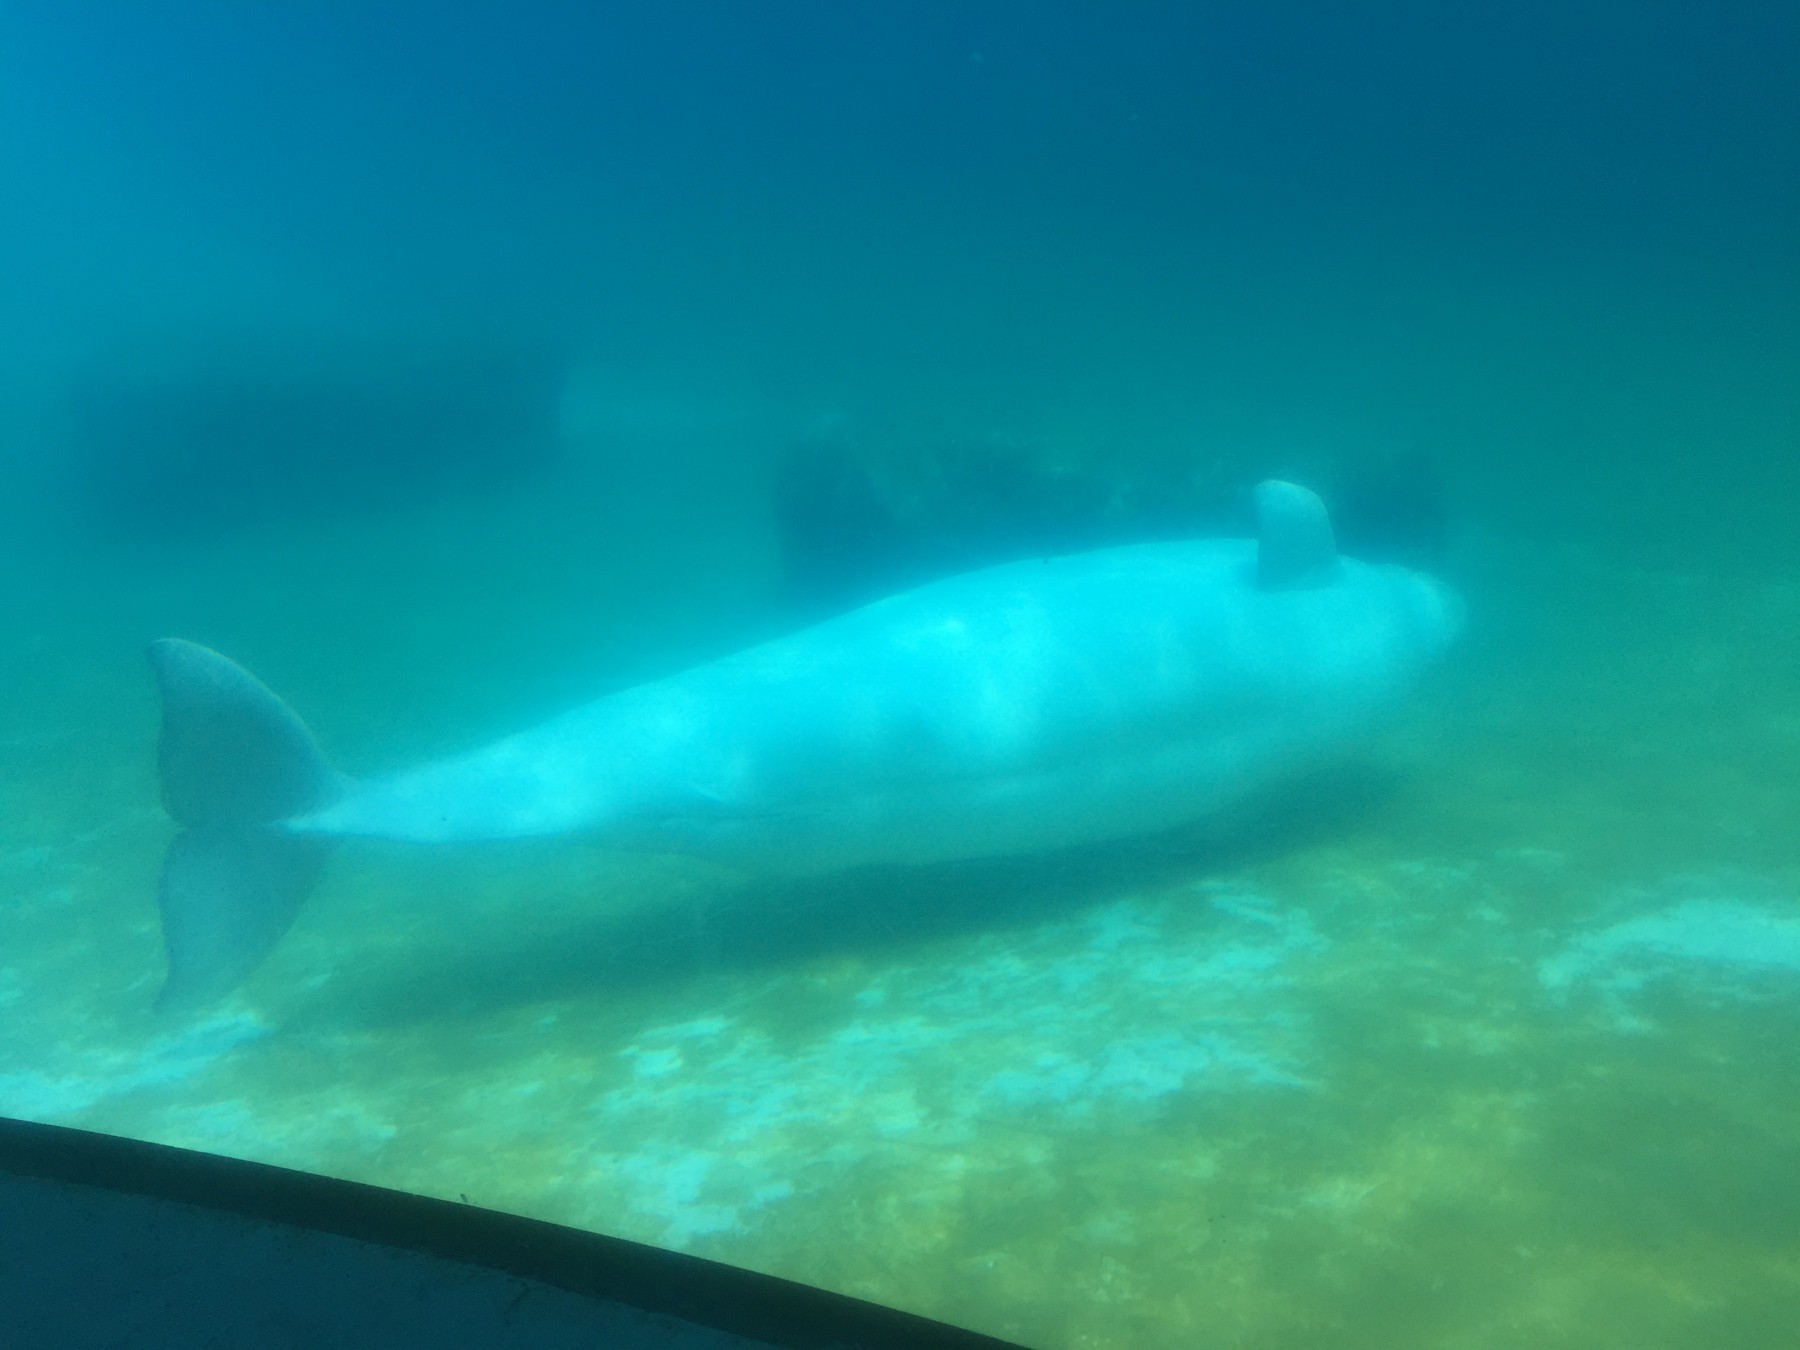 A beluga whale at MarineLand in Ontario